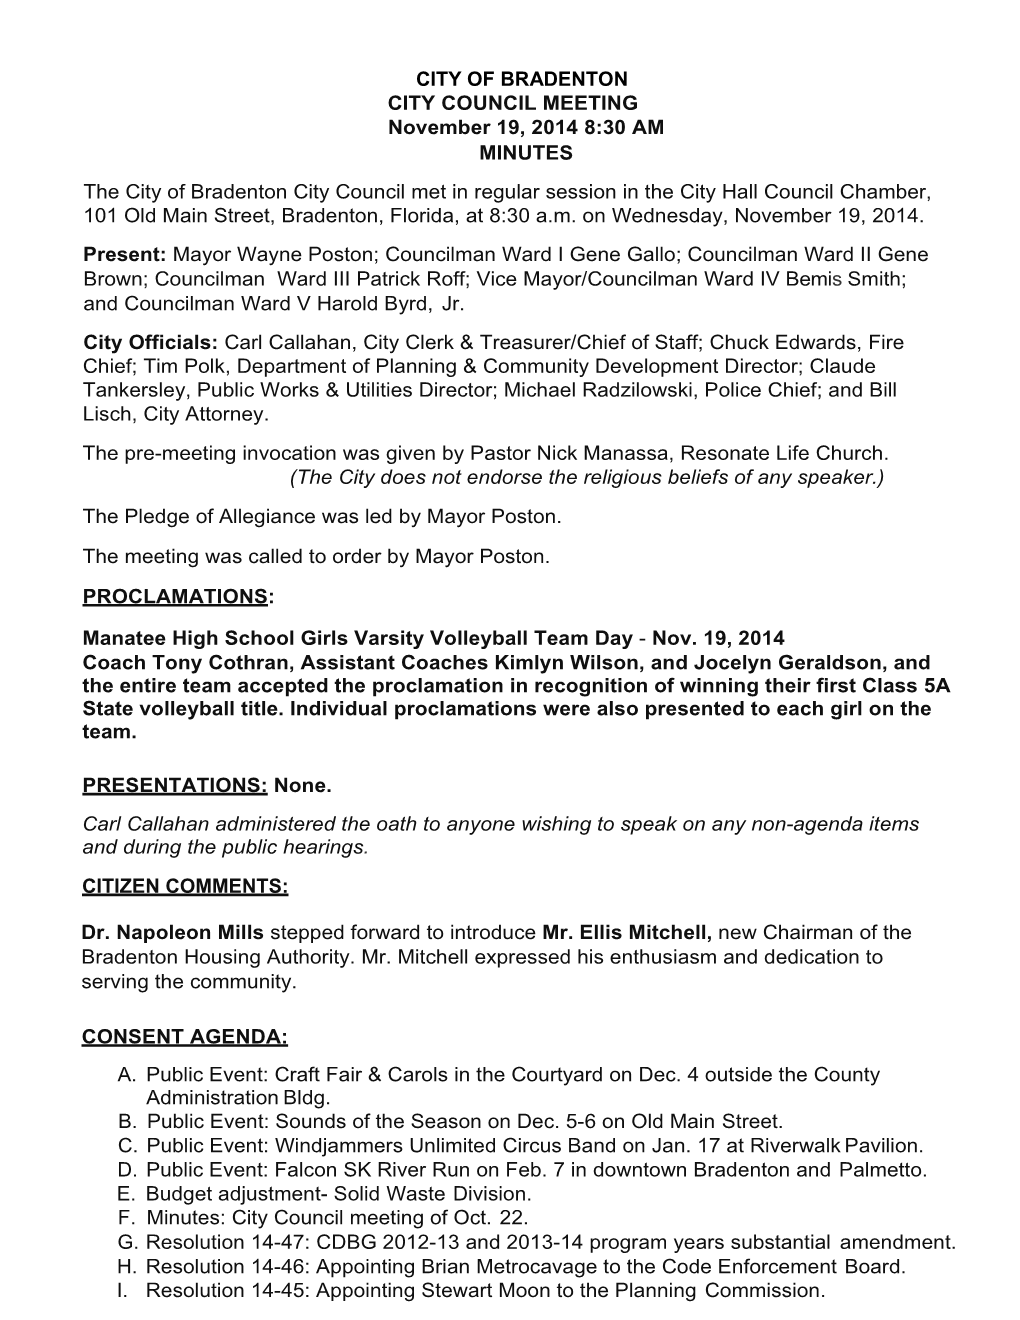 11-19-14 City Council Minutes